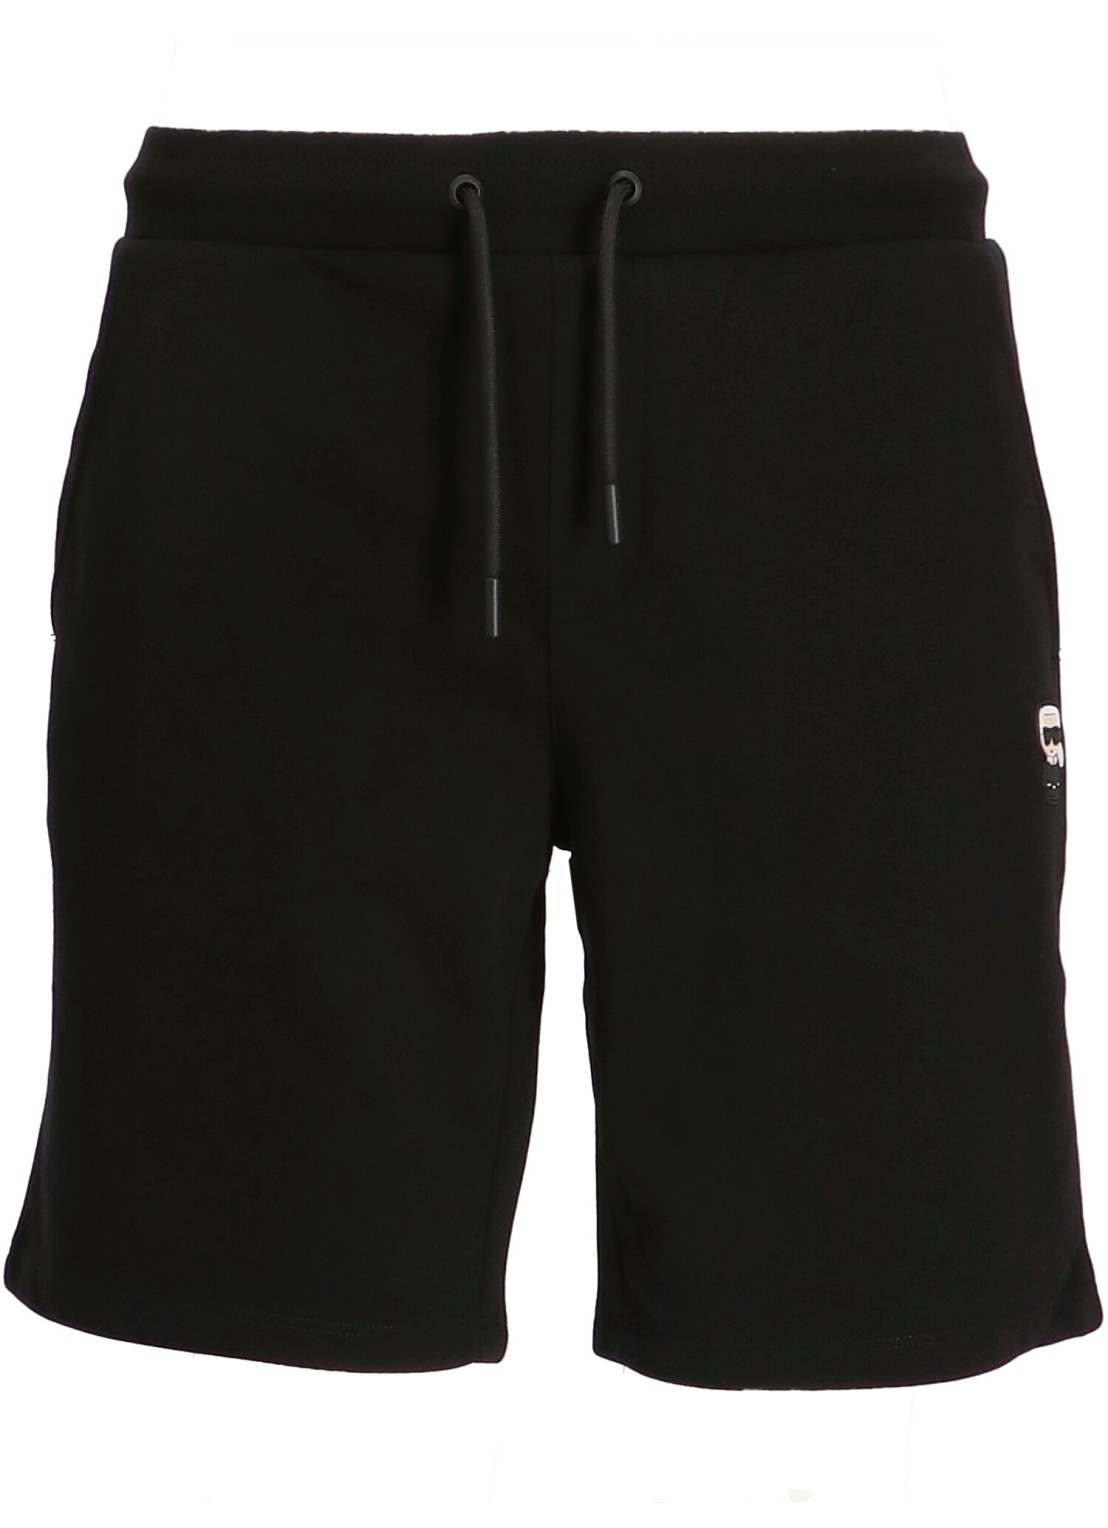 Pantalon corto karl lagerfeld short pant man sweat shorts nos 705897500900 990 talla negro
 